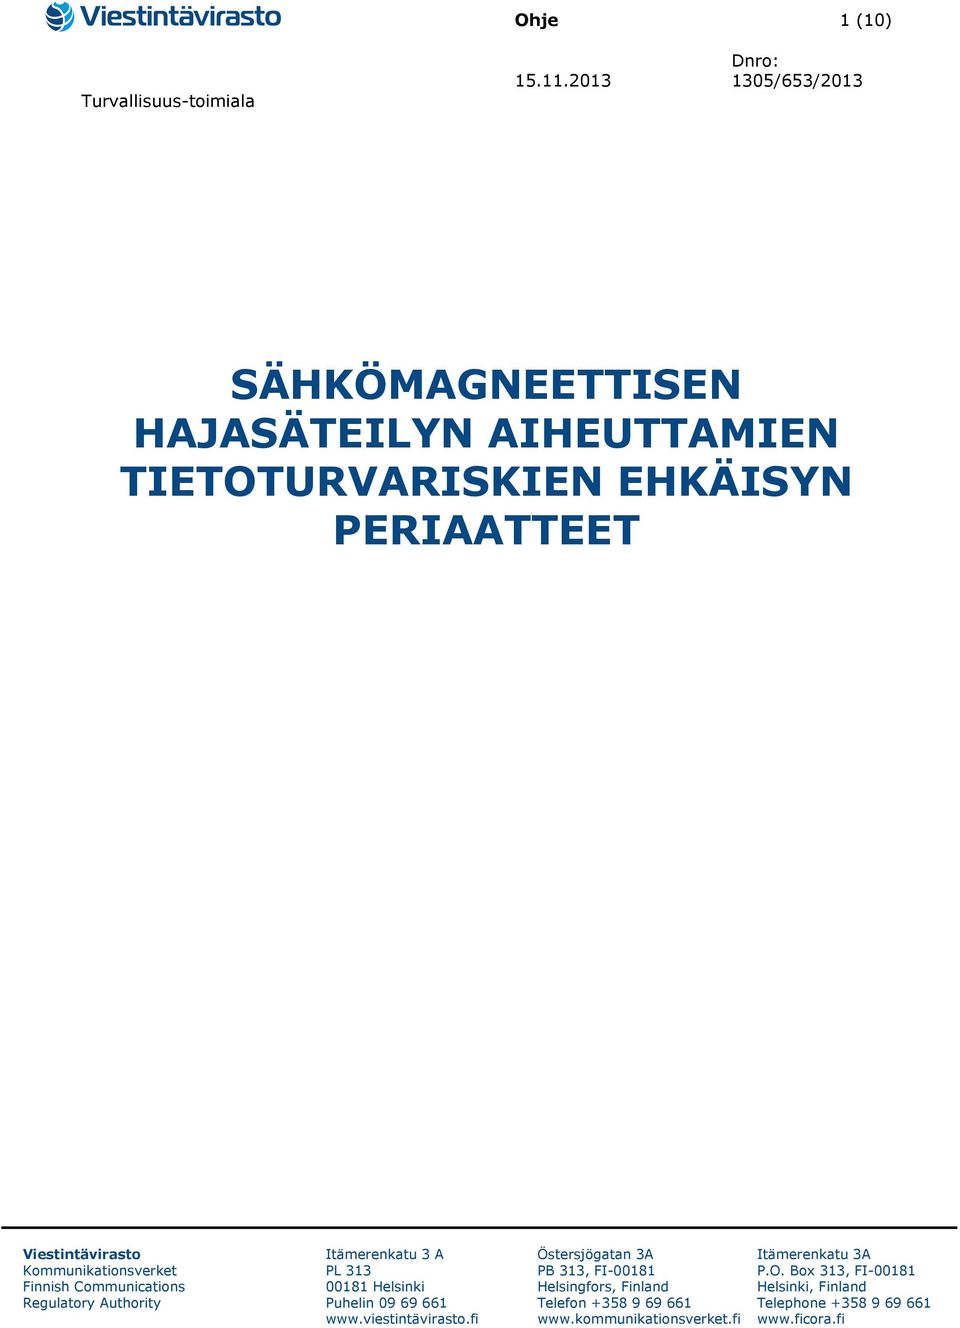 Kommunikationsverket Finnish Communications Regulatory Authority Itämerenkatu 3 A PL 313 00181 Helsinki Puhelin 09 69 661 www.